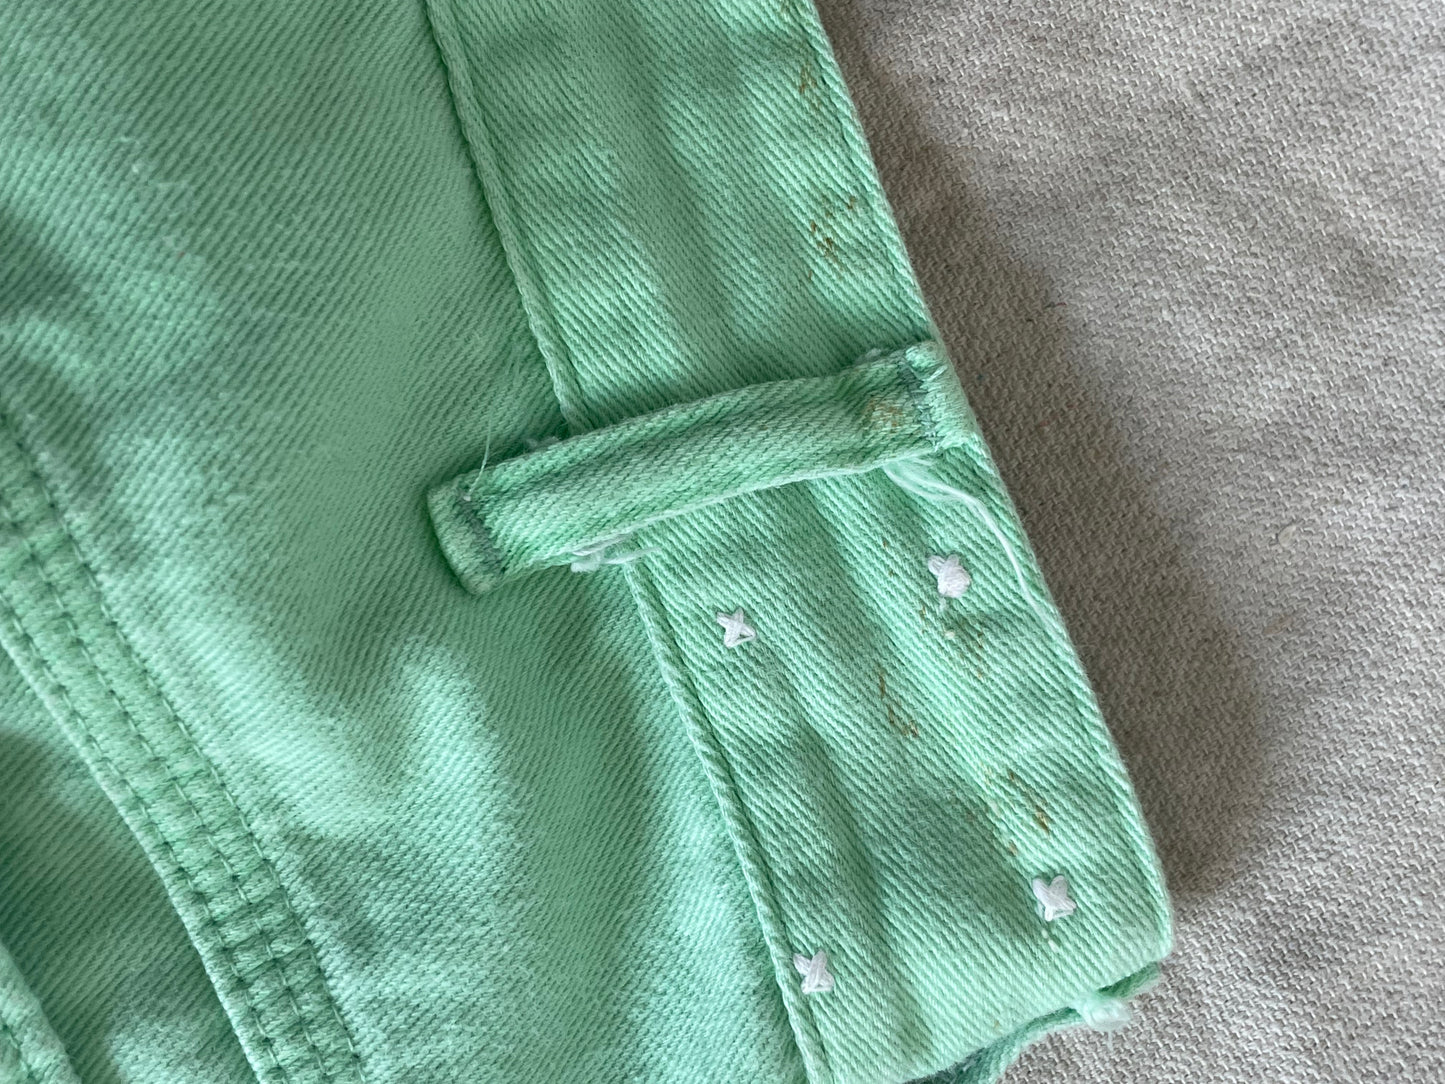 70s Mint Green Carpenter Pants